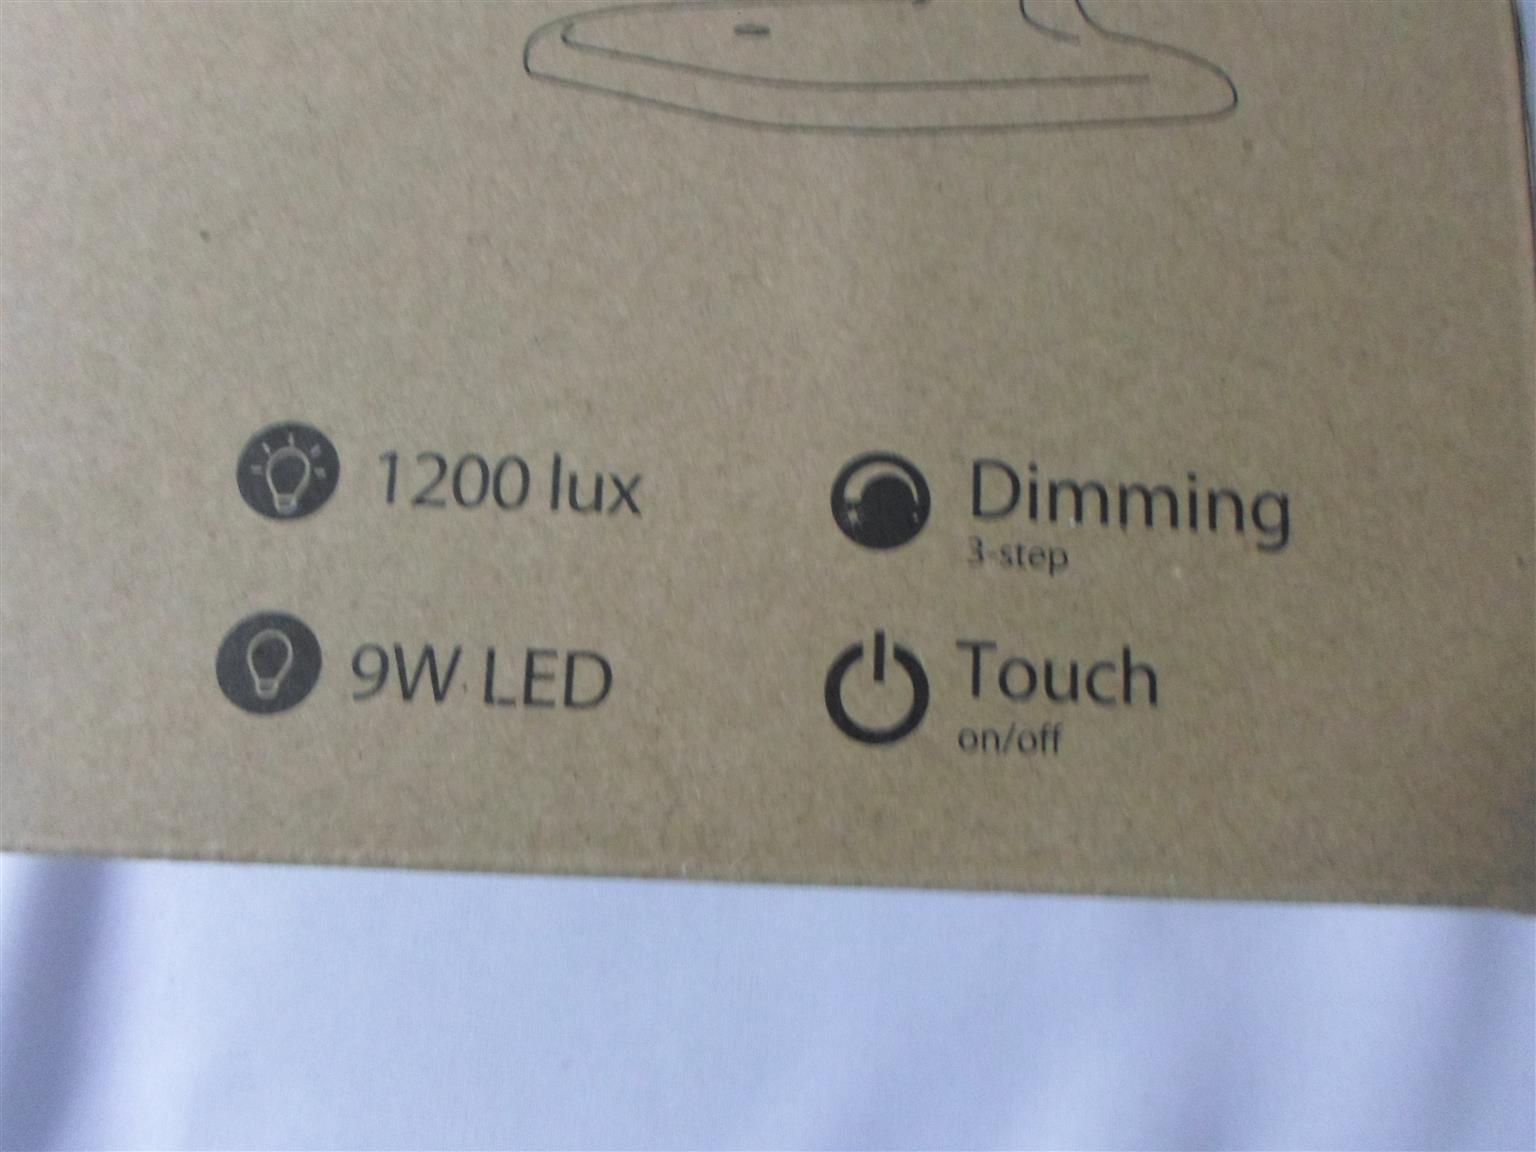 Desk Lamp LED 9W 1200luxondition bac